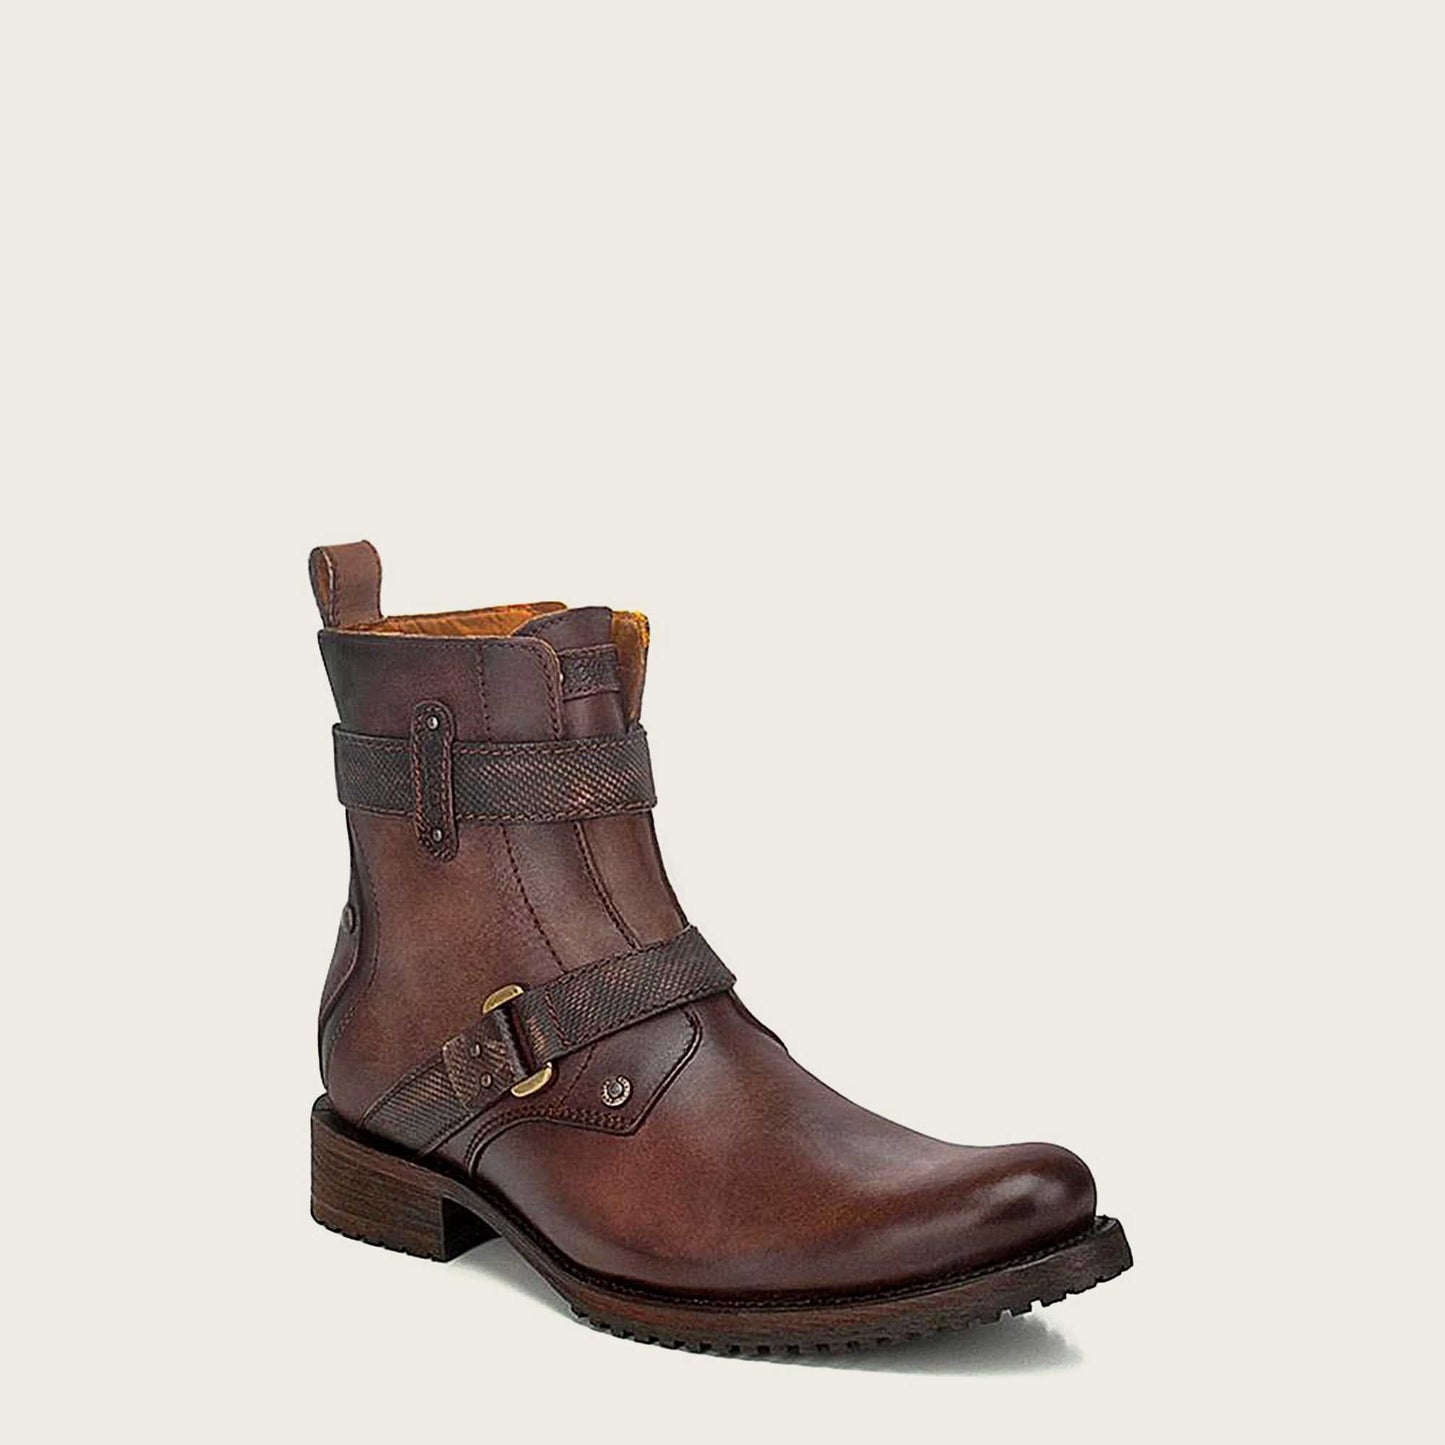 Premium bovine leather ankle boots